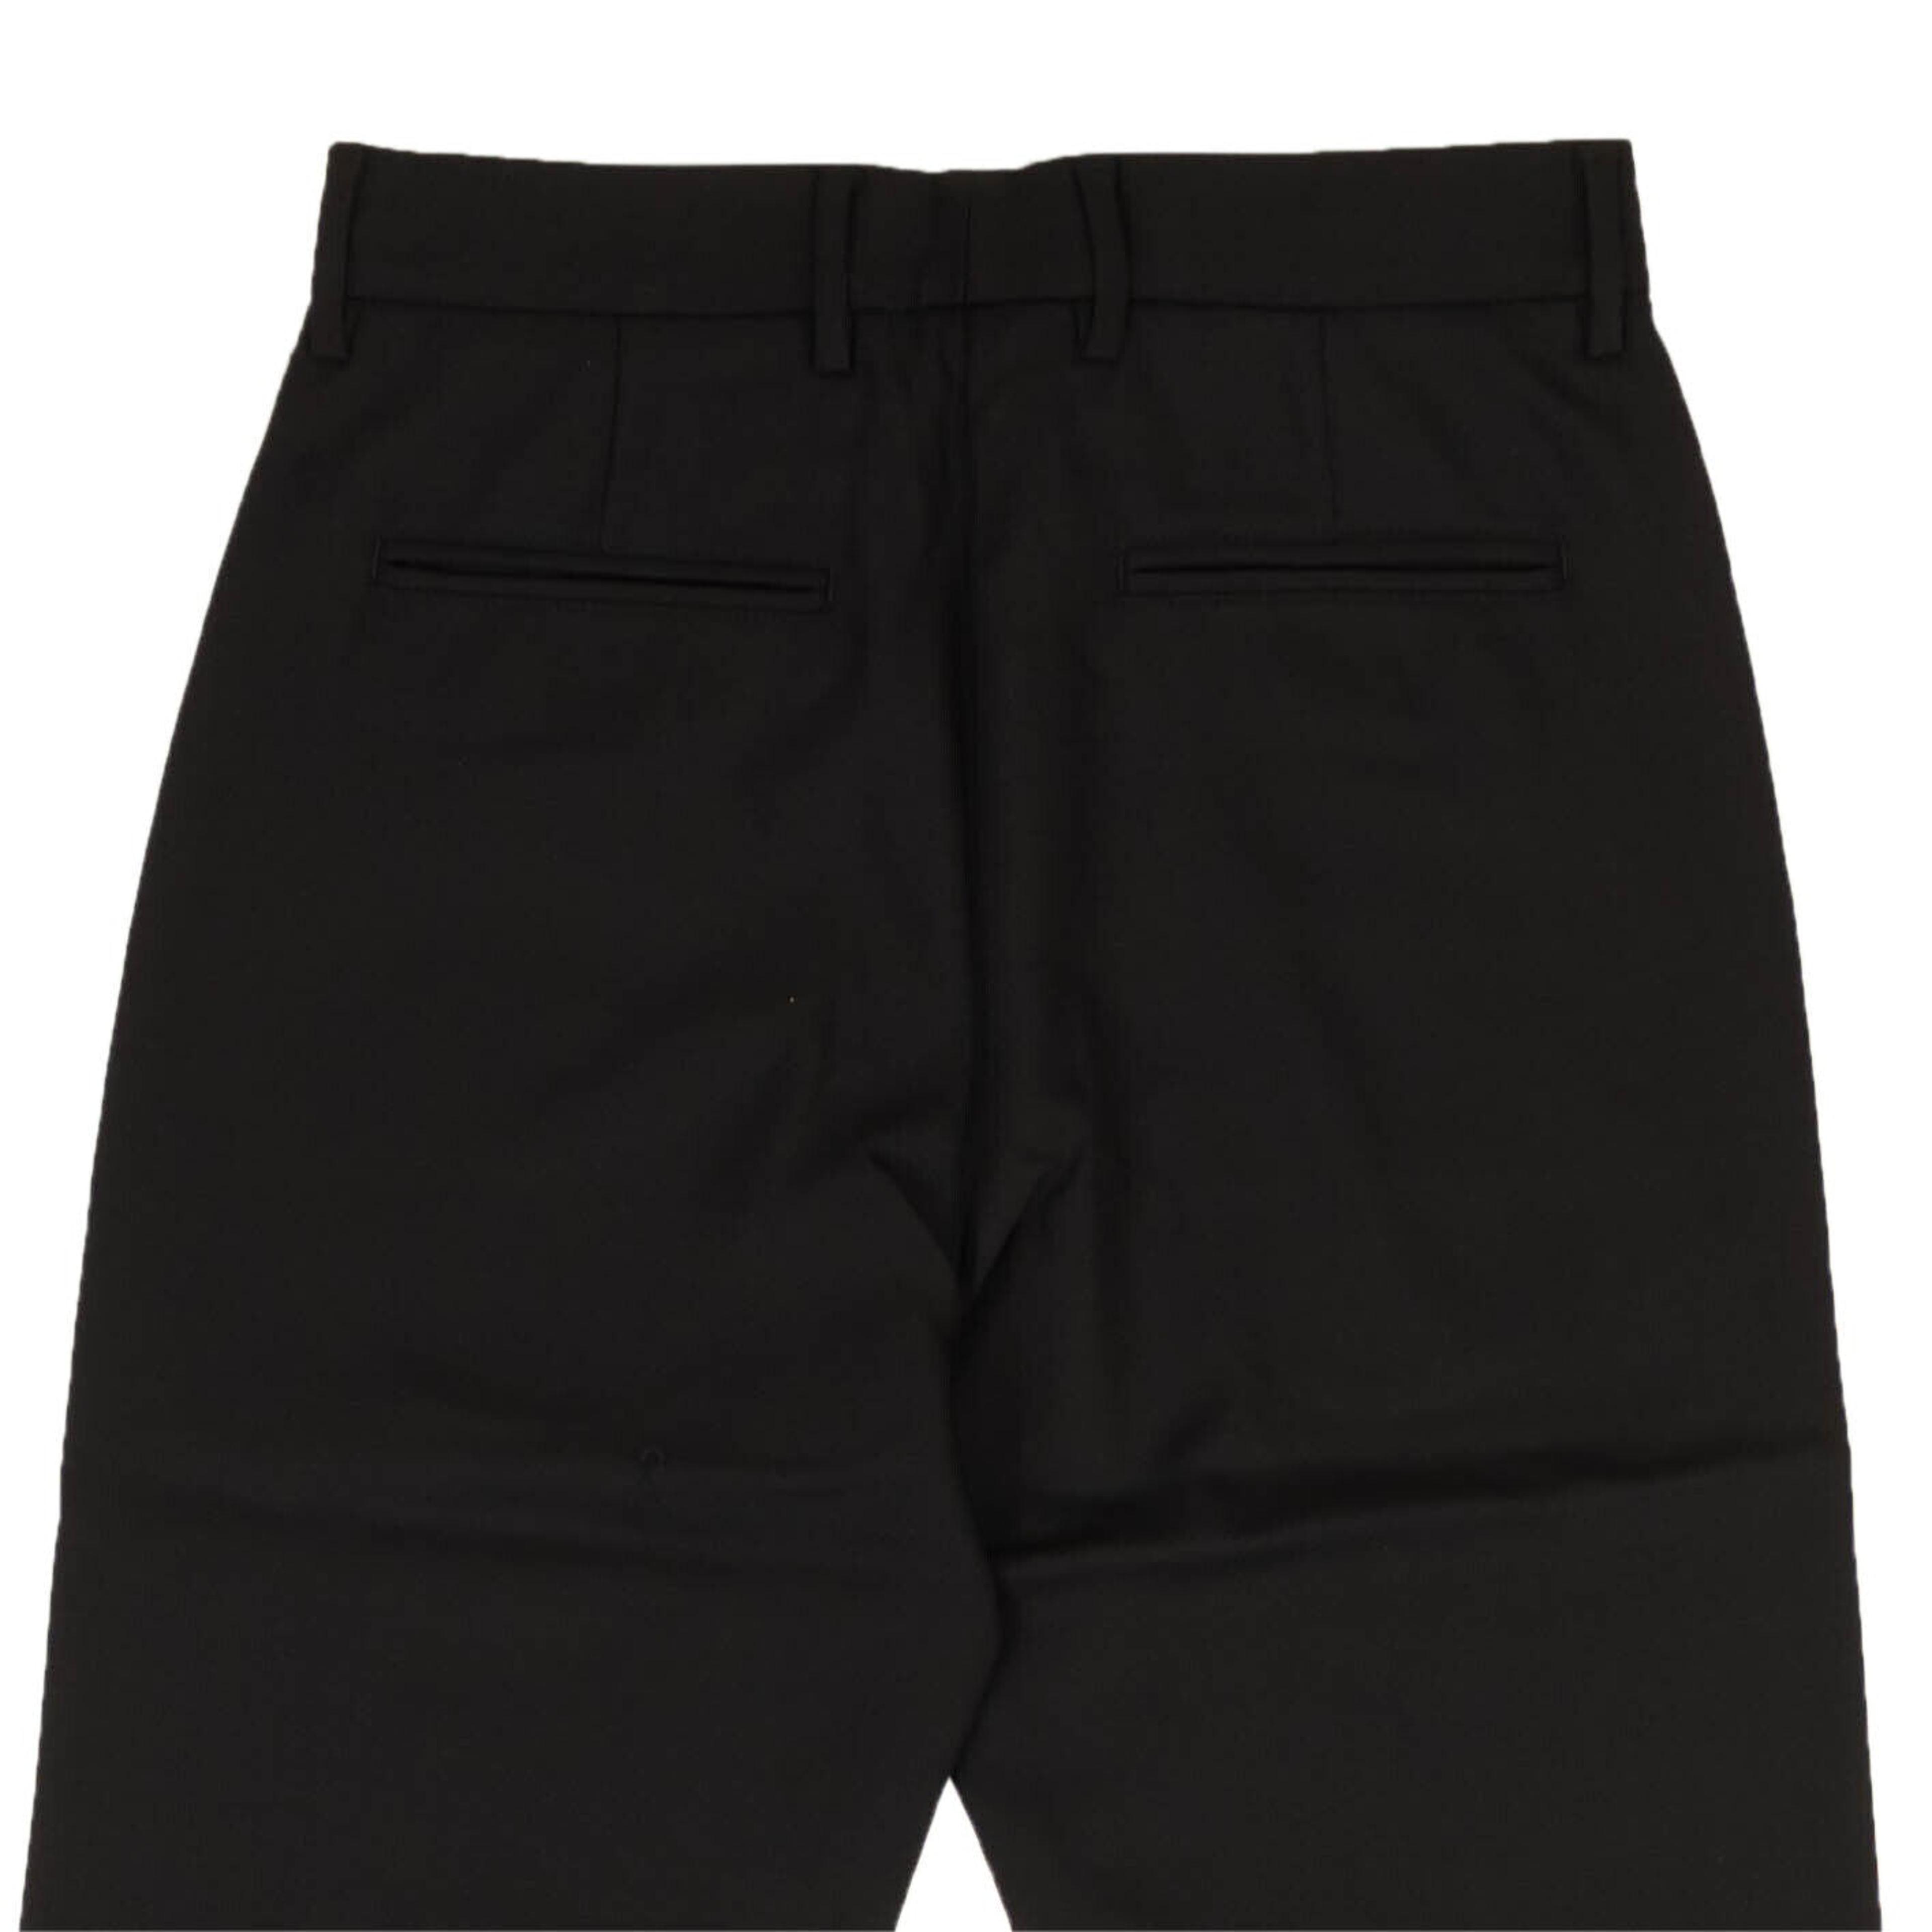 Alternate View 3 of 424 On Fairfax Wool Dress Pants - Black